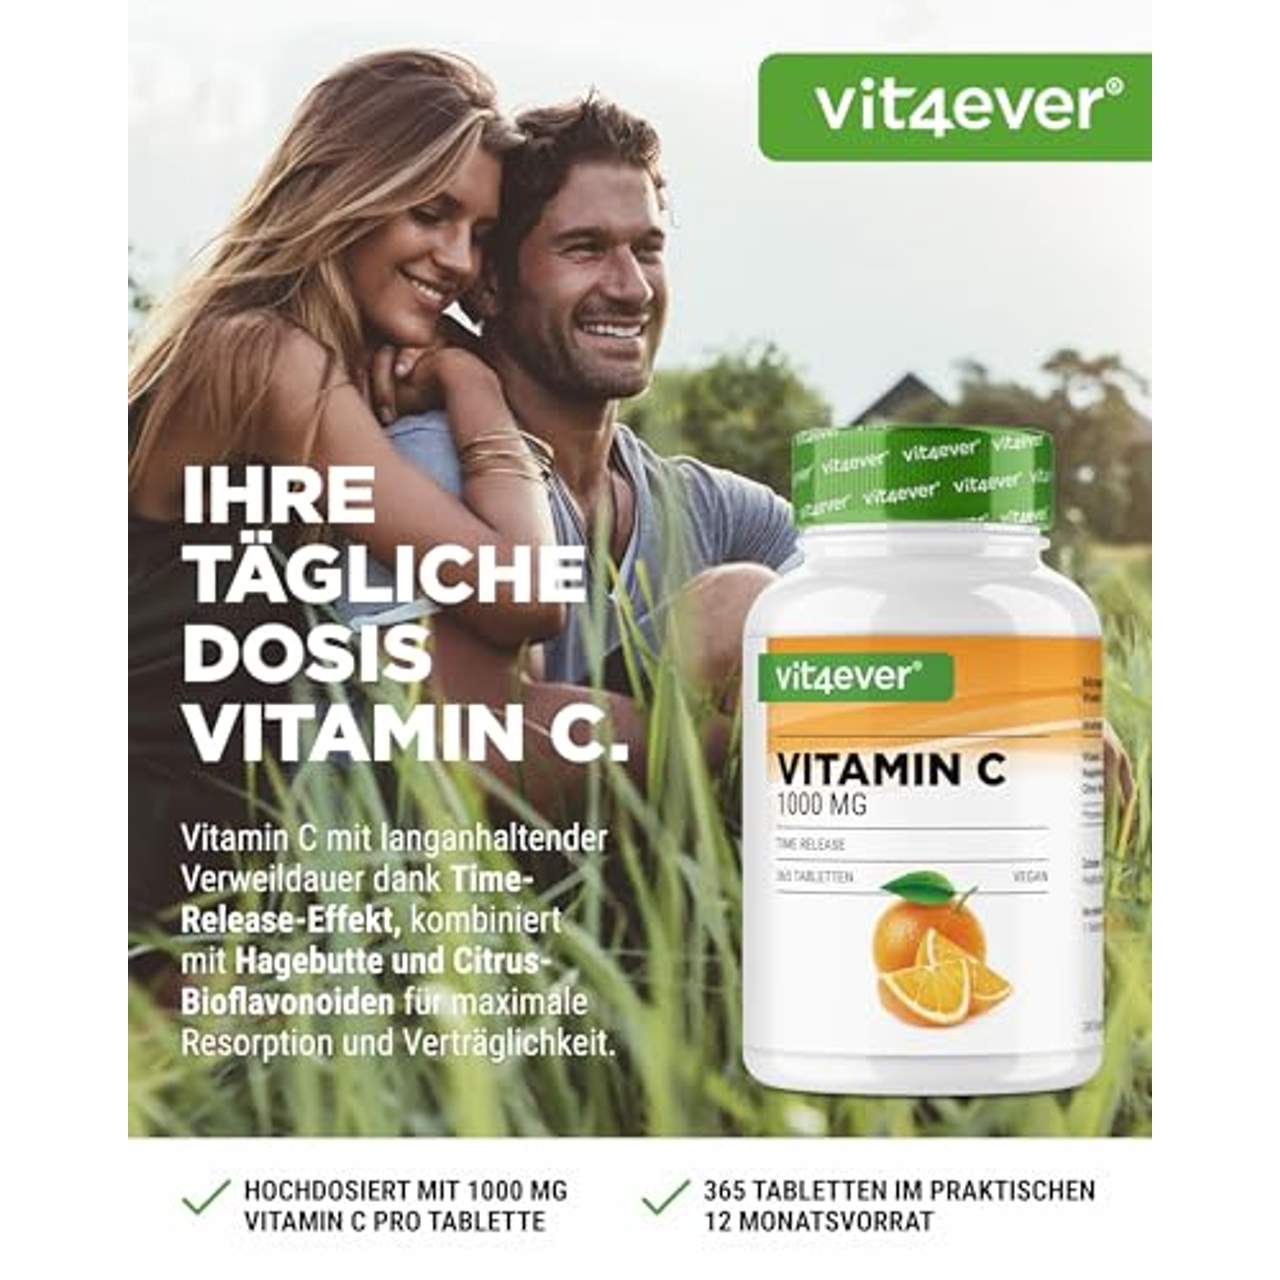 Vit4ever Vitamin C 1000mg